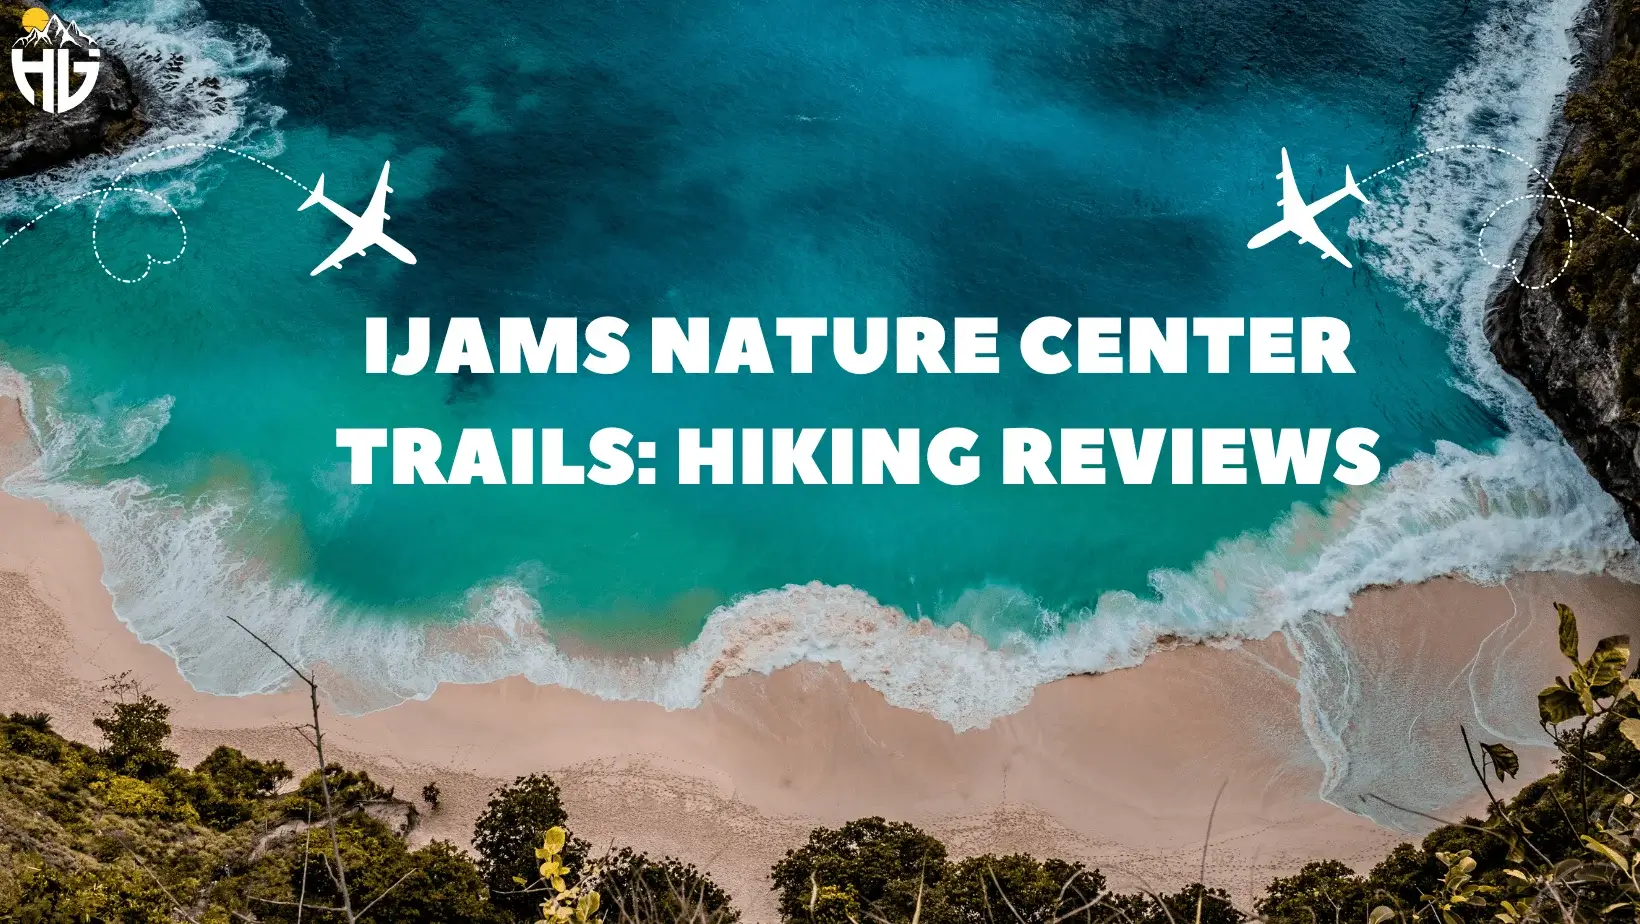 Ijams Nature Center Trails: Hiking Reviews